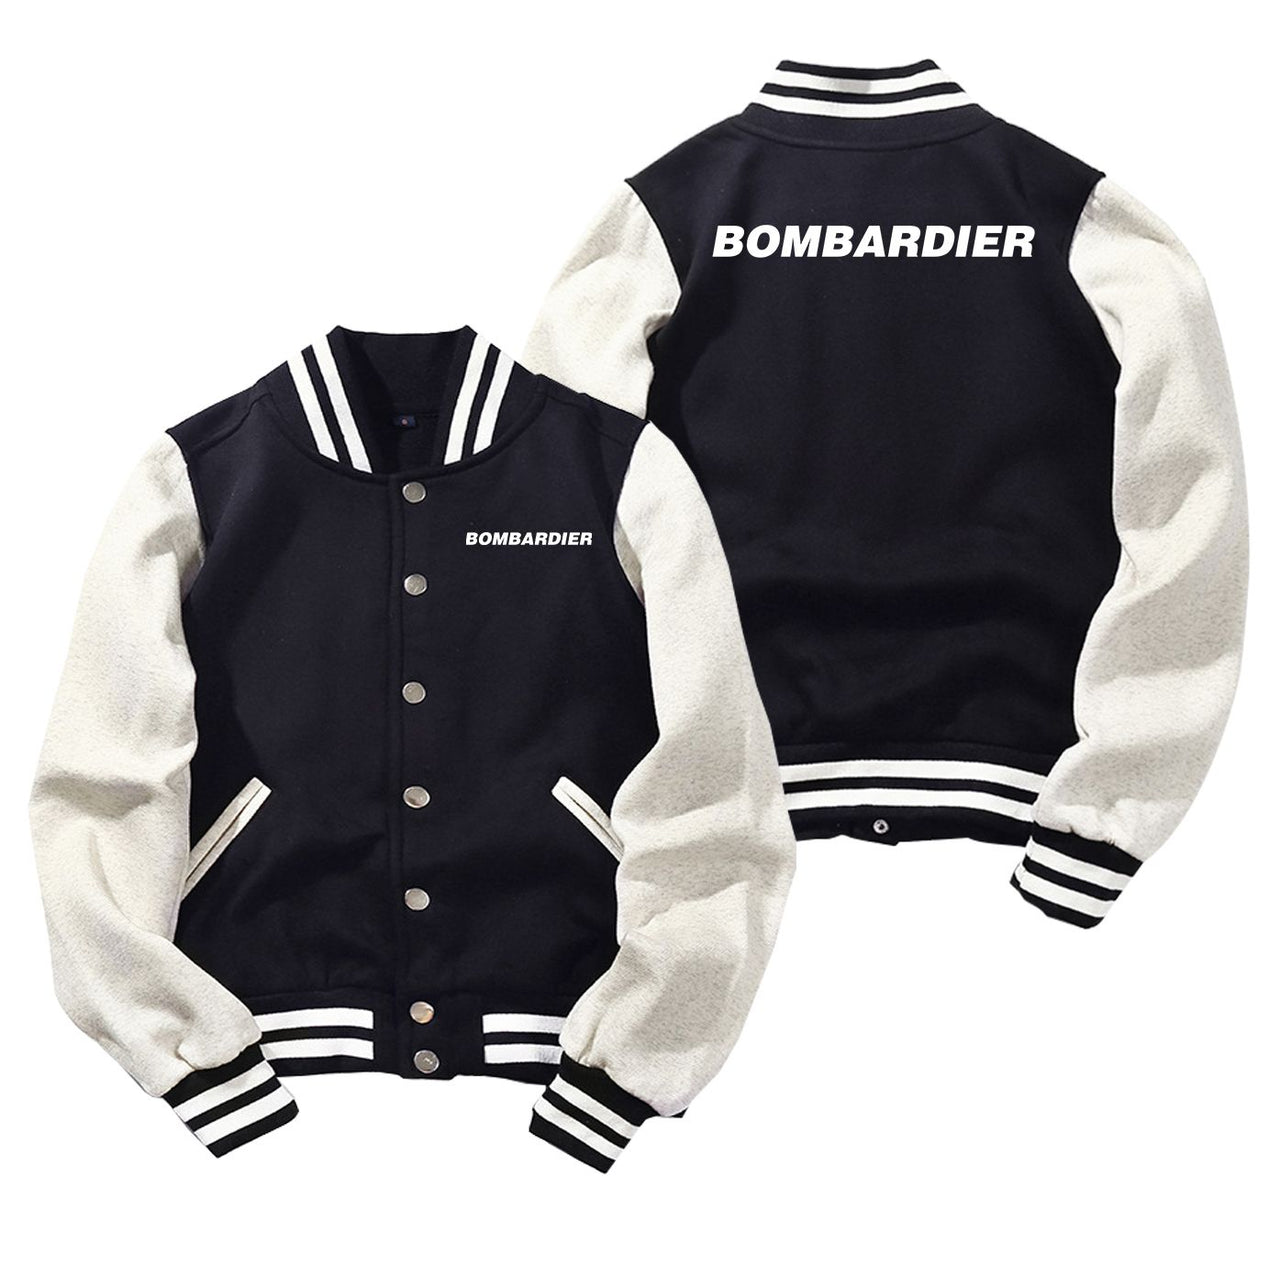 Bombardier & Text Designed Baseball Style Jackets